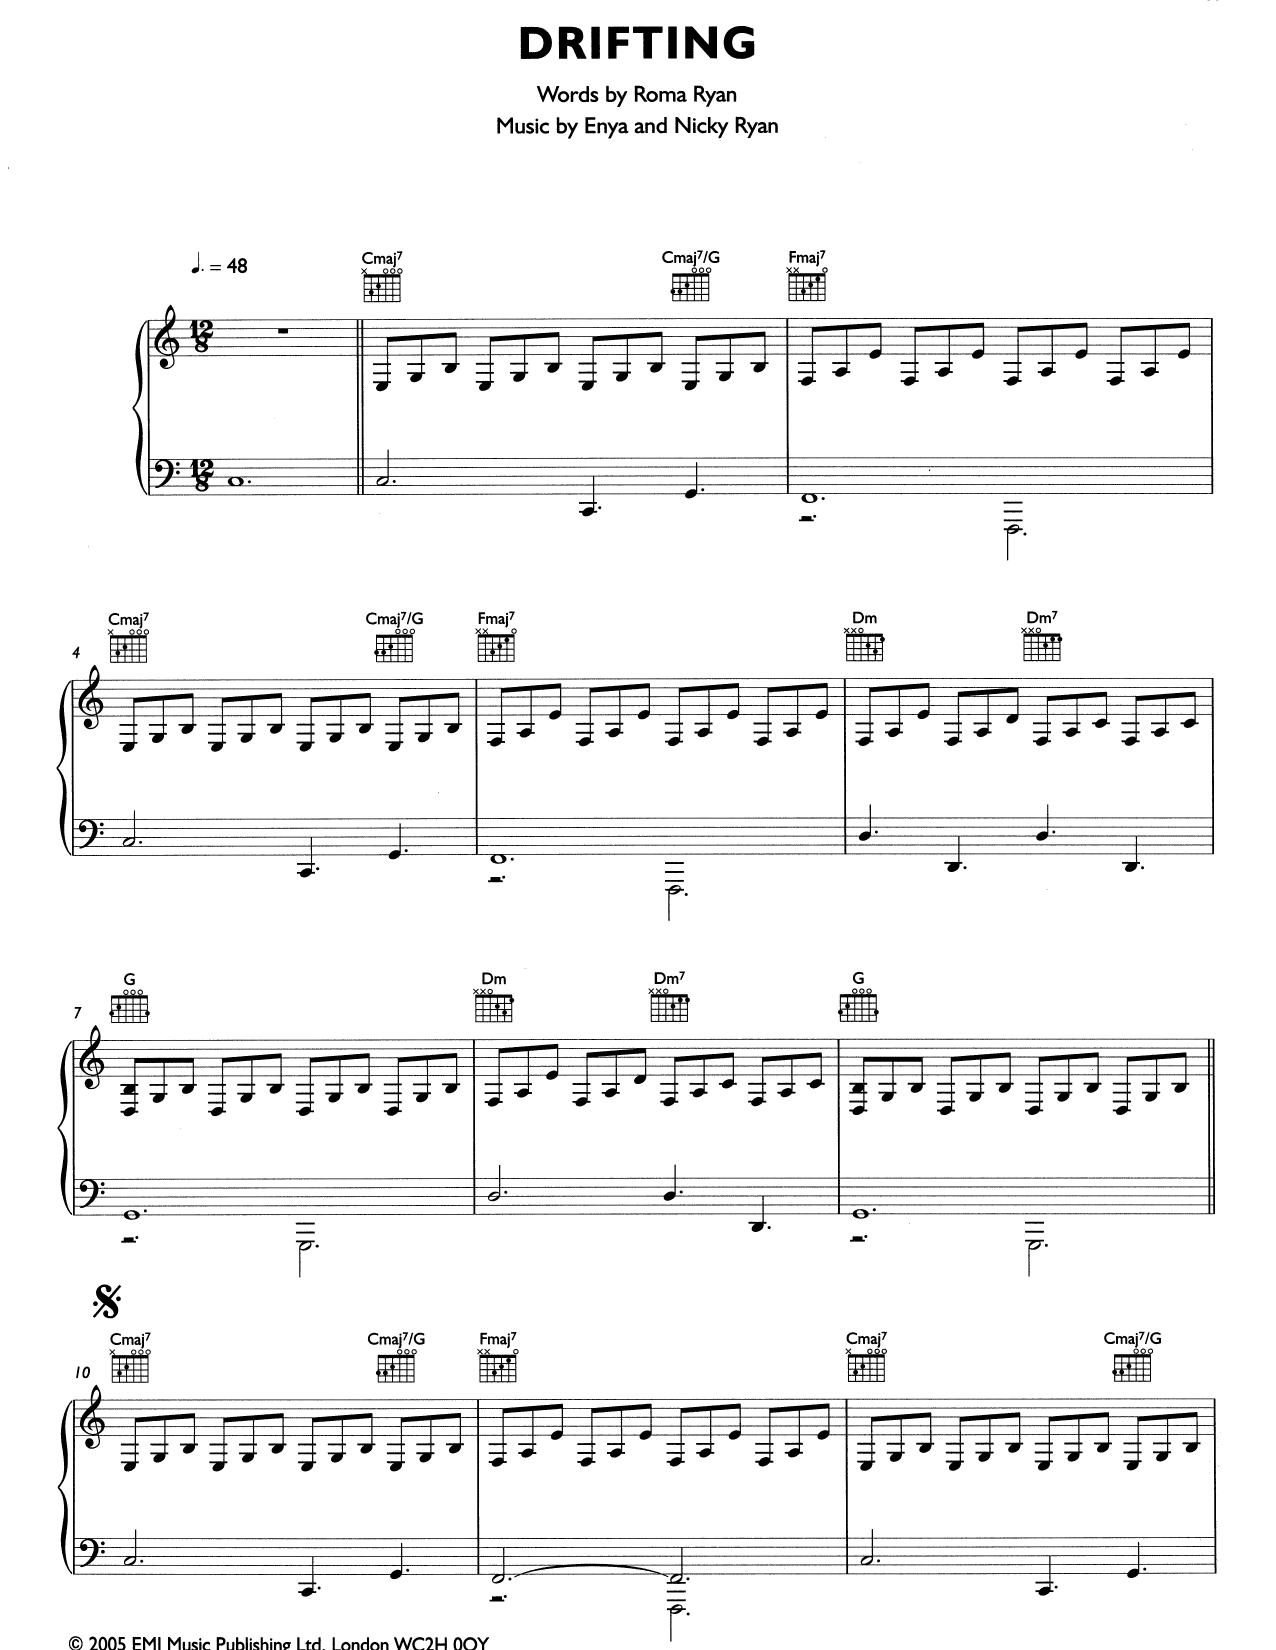 Enya "Drifting" Sheet Music PDF Notes, Chords | Pop Score Piano.